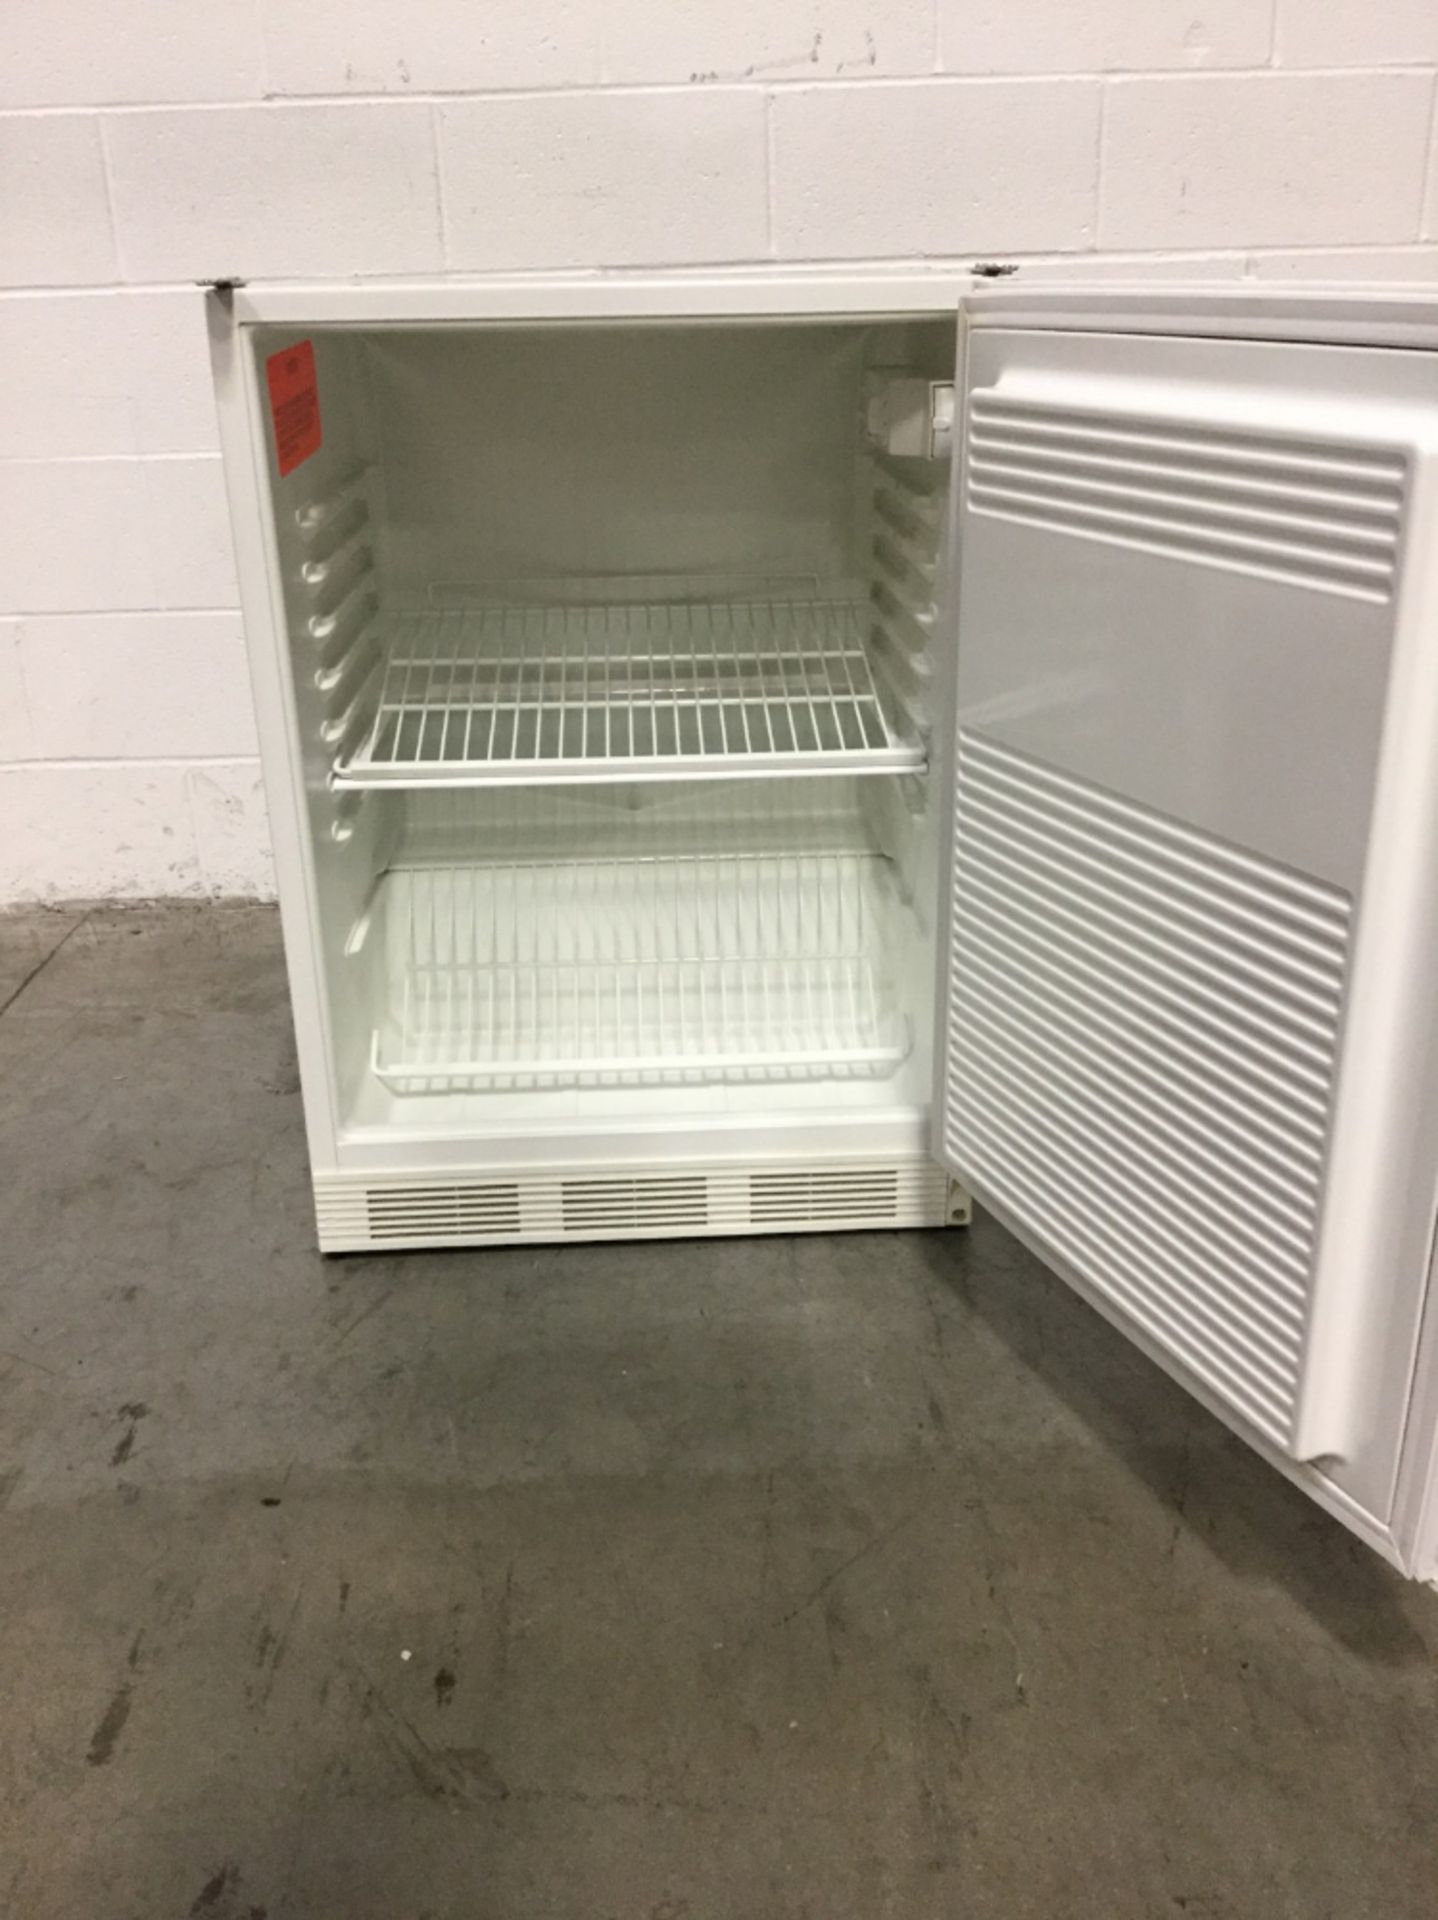 Lab-Line Cool-Lab Under Counter Refrigerator/Freezer - Image 3 of 3